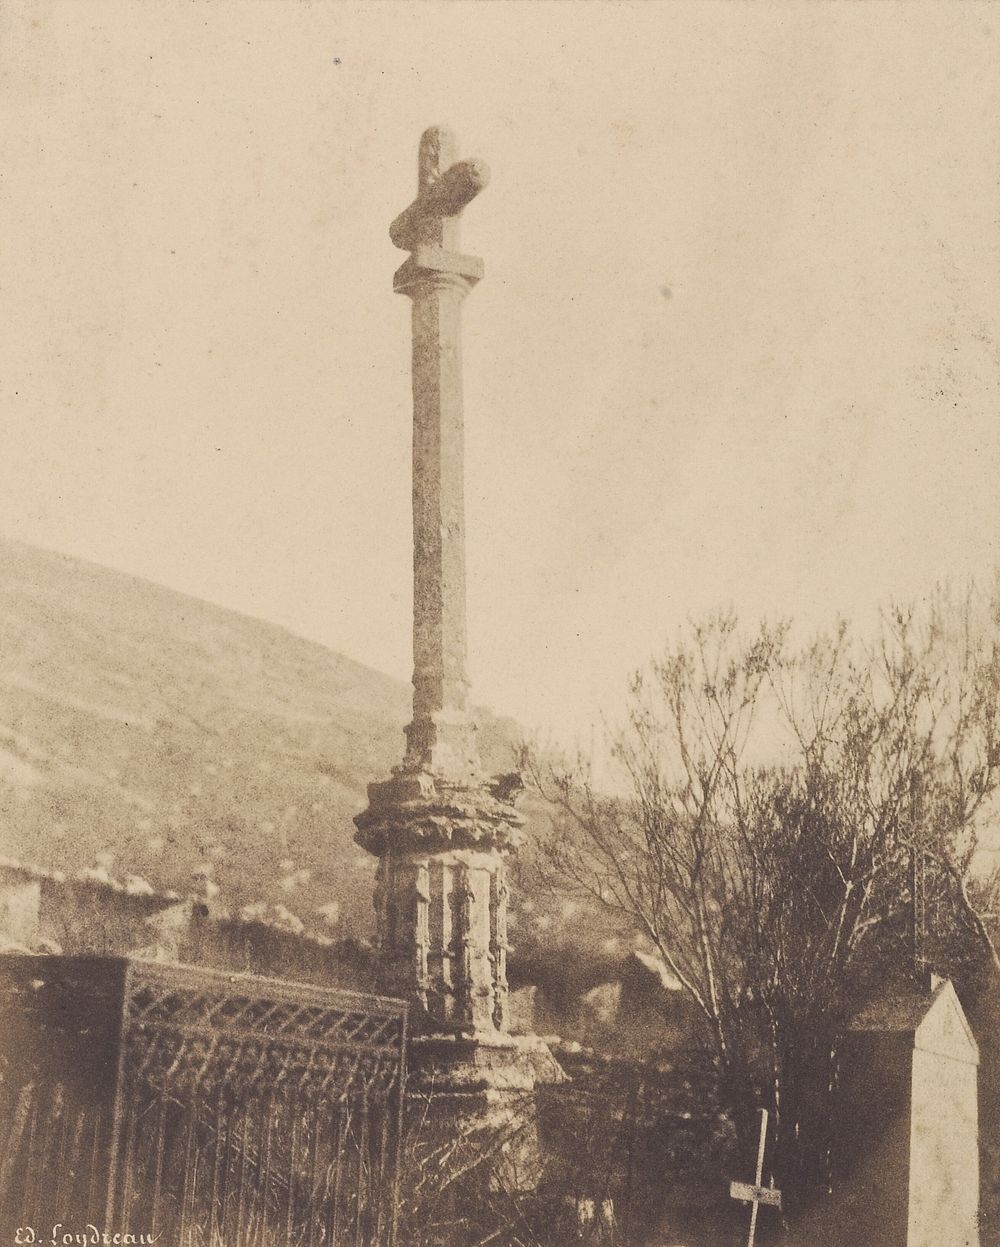 Cross on a Pillar by Édouard Loydreau and Louis Désiré Blanquart Evrard